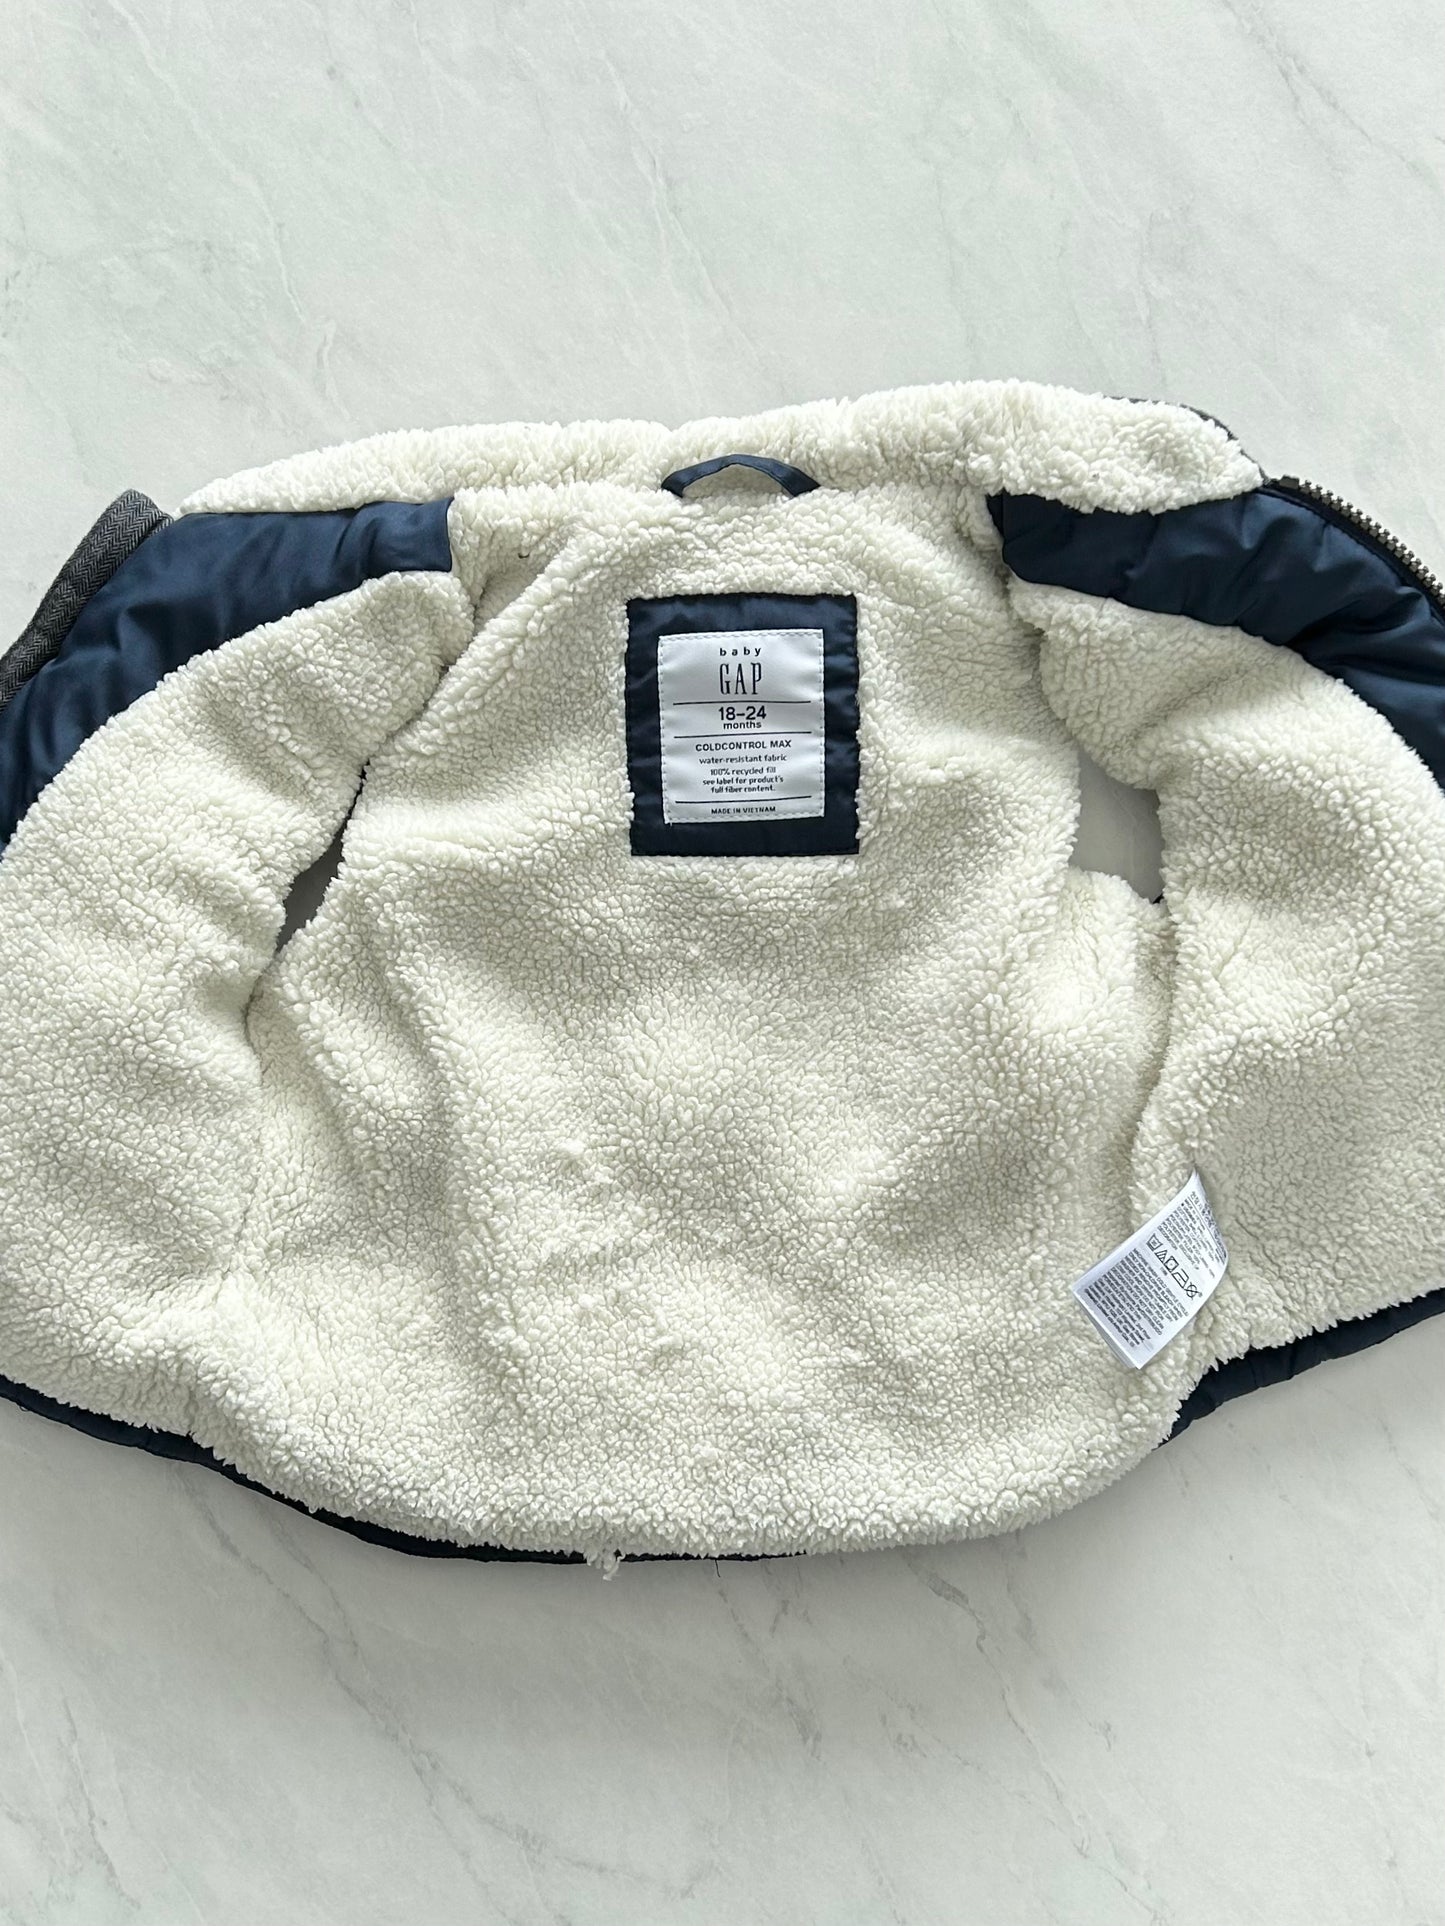 Sleeveless jacket - Baby Gap - 18-24 months